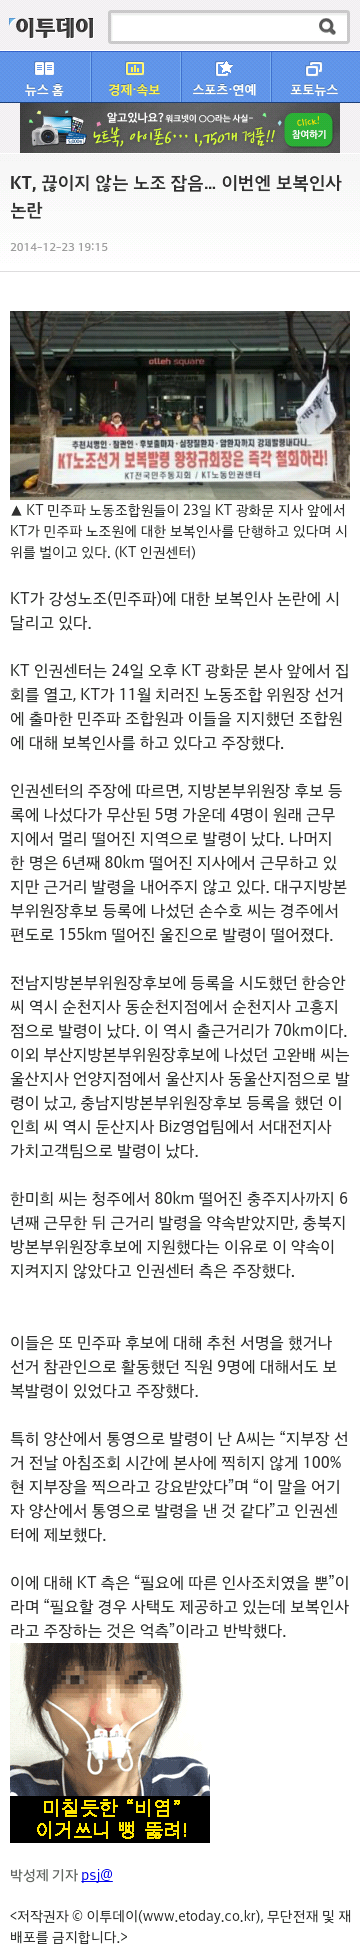 KT노조선거 보복발령 보도기사(20141223이투데이).png